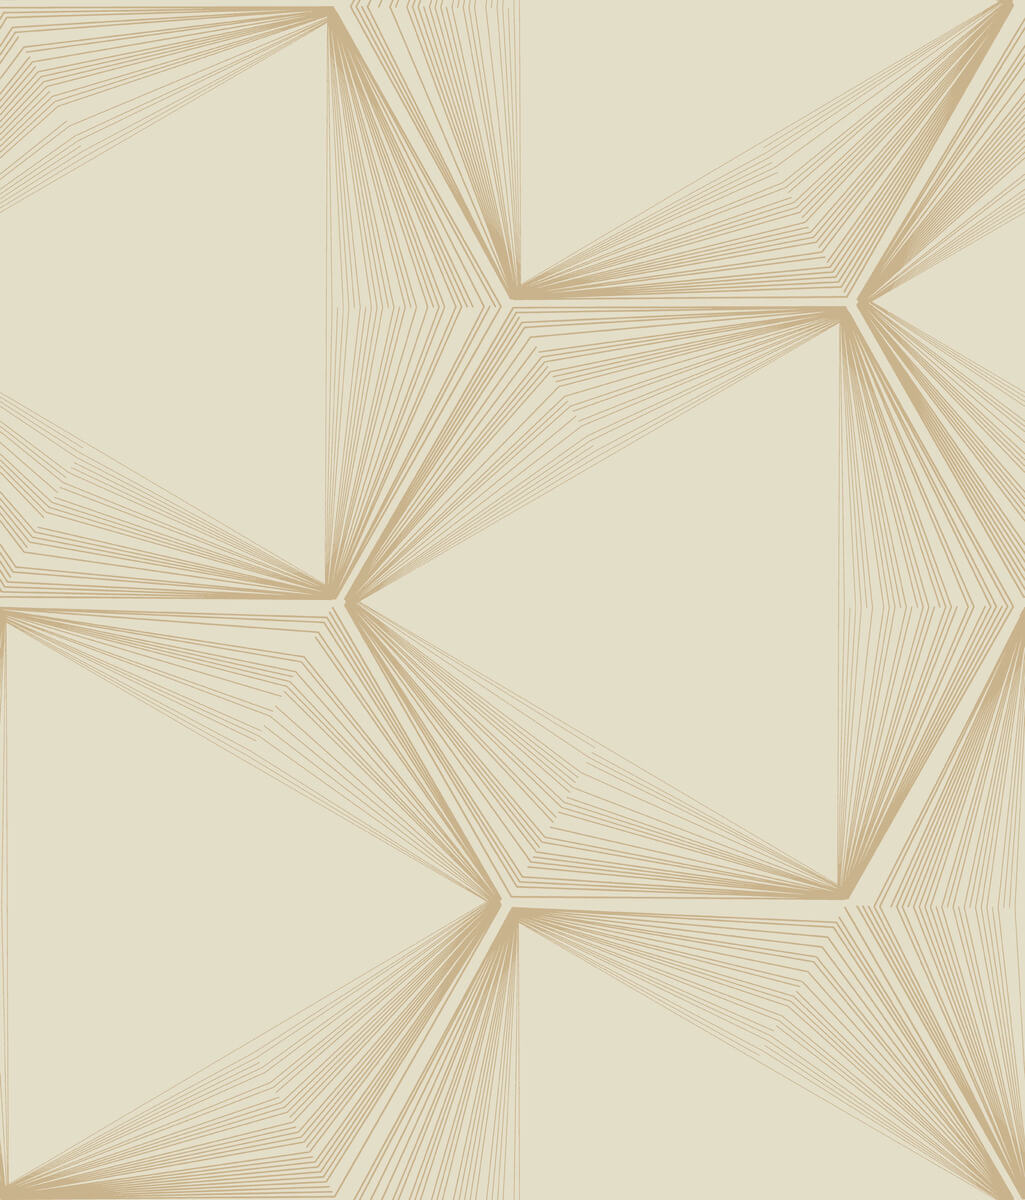 Simply Candice Olson Honeycomb Peel & Stick Wallpaper - Sand & Gold